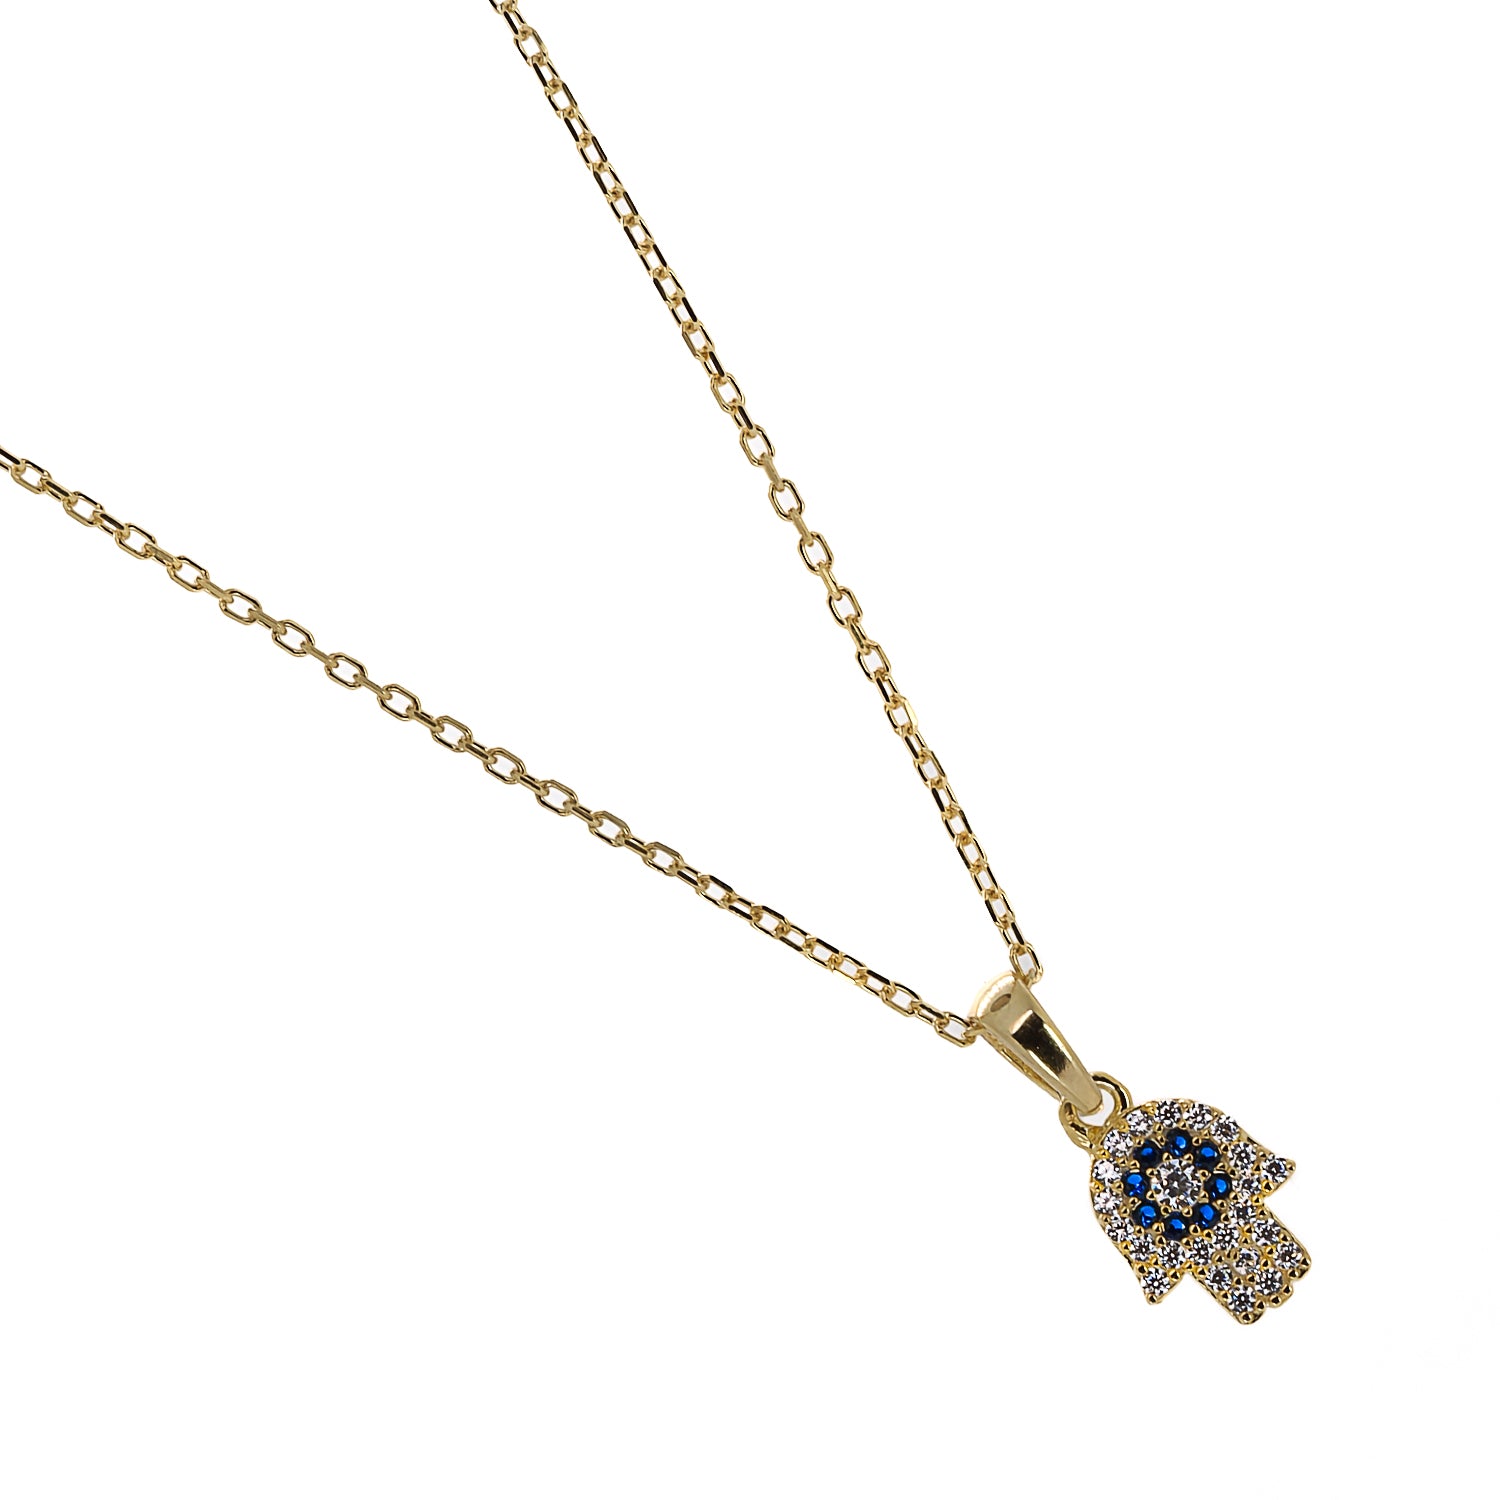 9ct Gold Hamsa Hand Necklace - 16 - 20 Inches | eBay